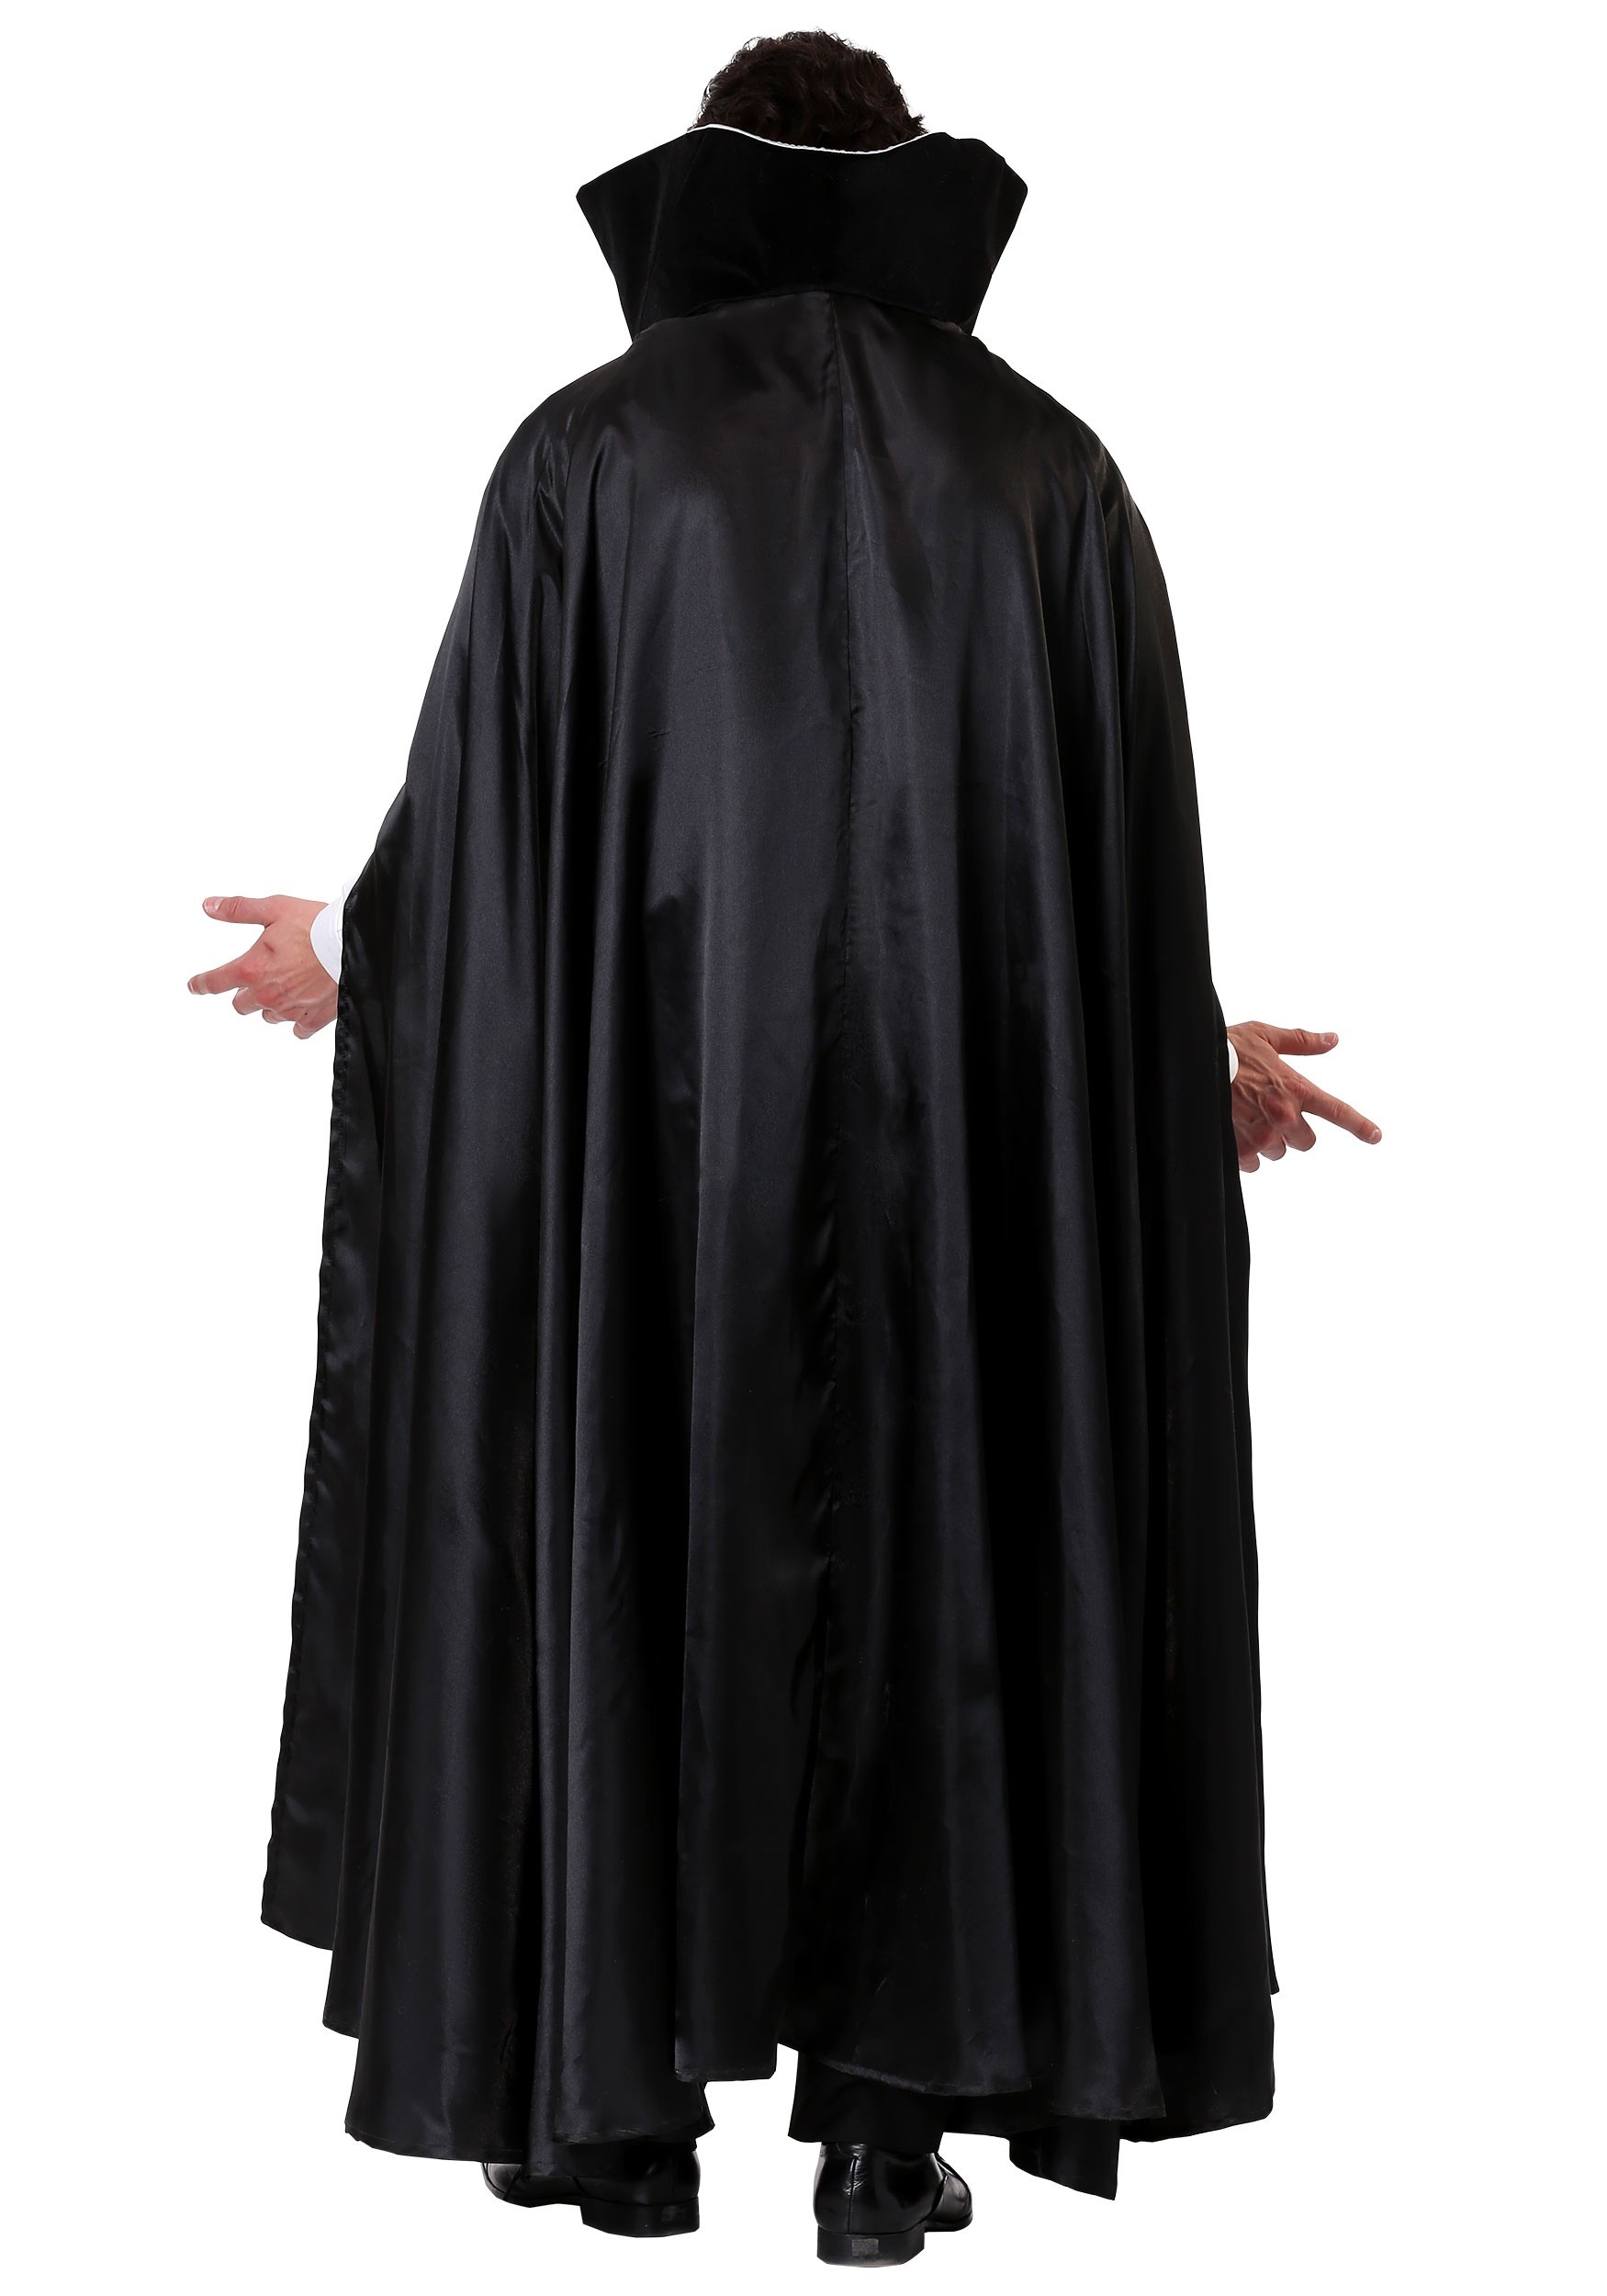 Black Vampire Cloak Fancy Dress Costume For An Adult